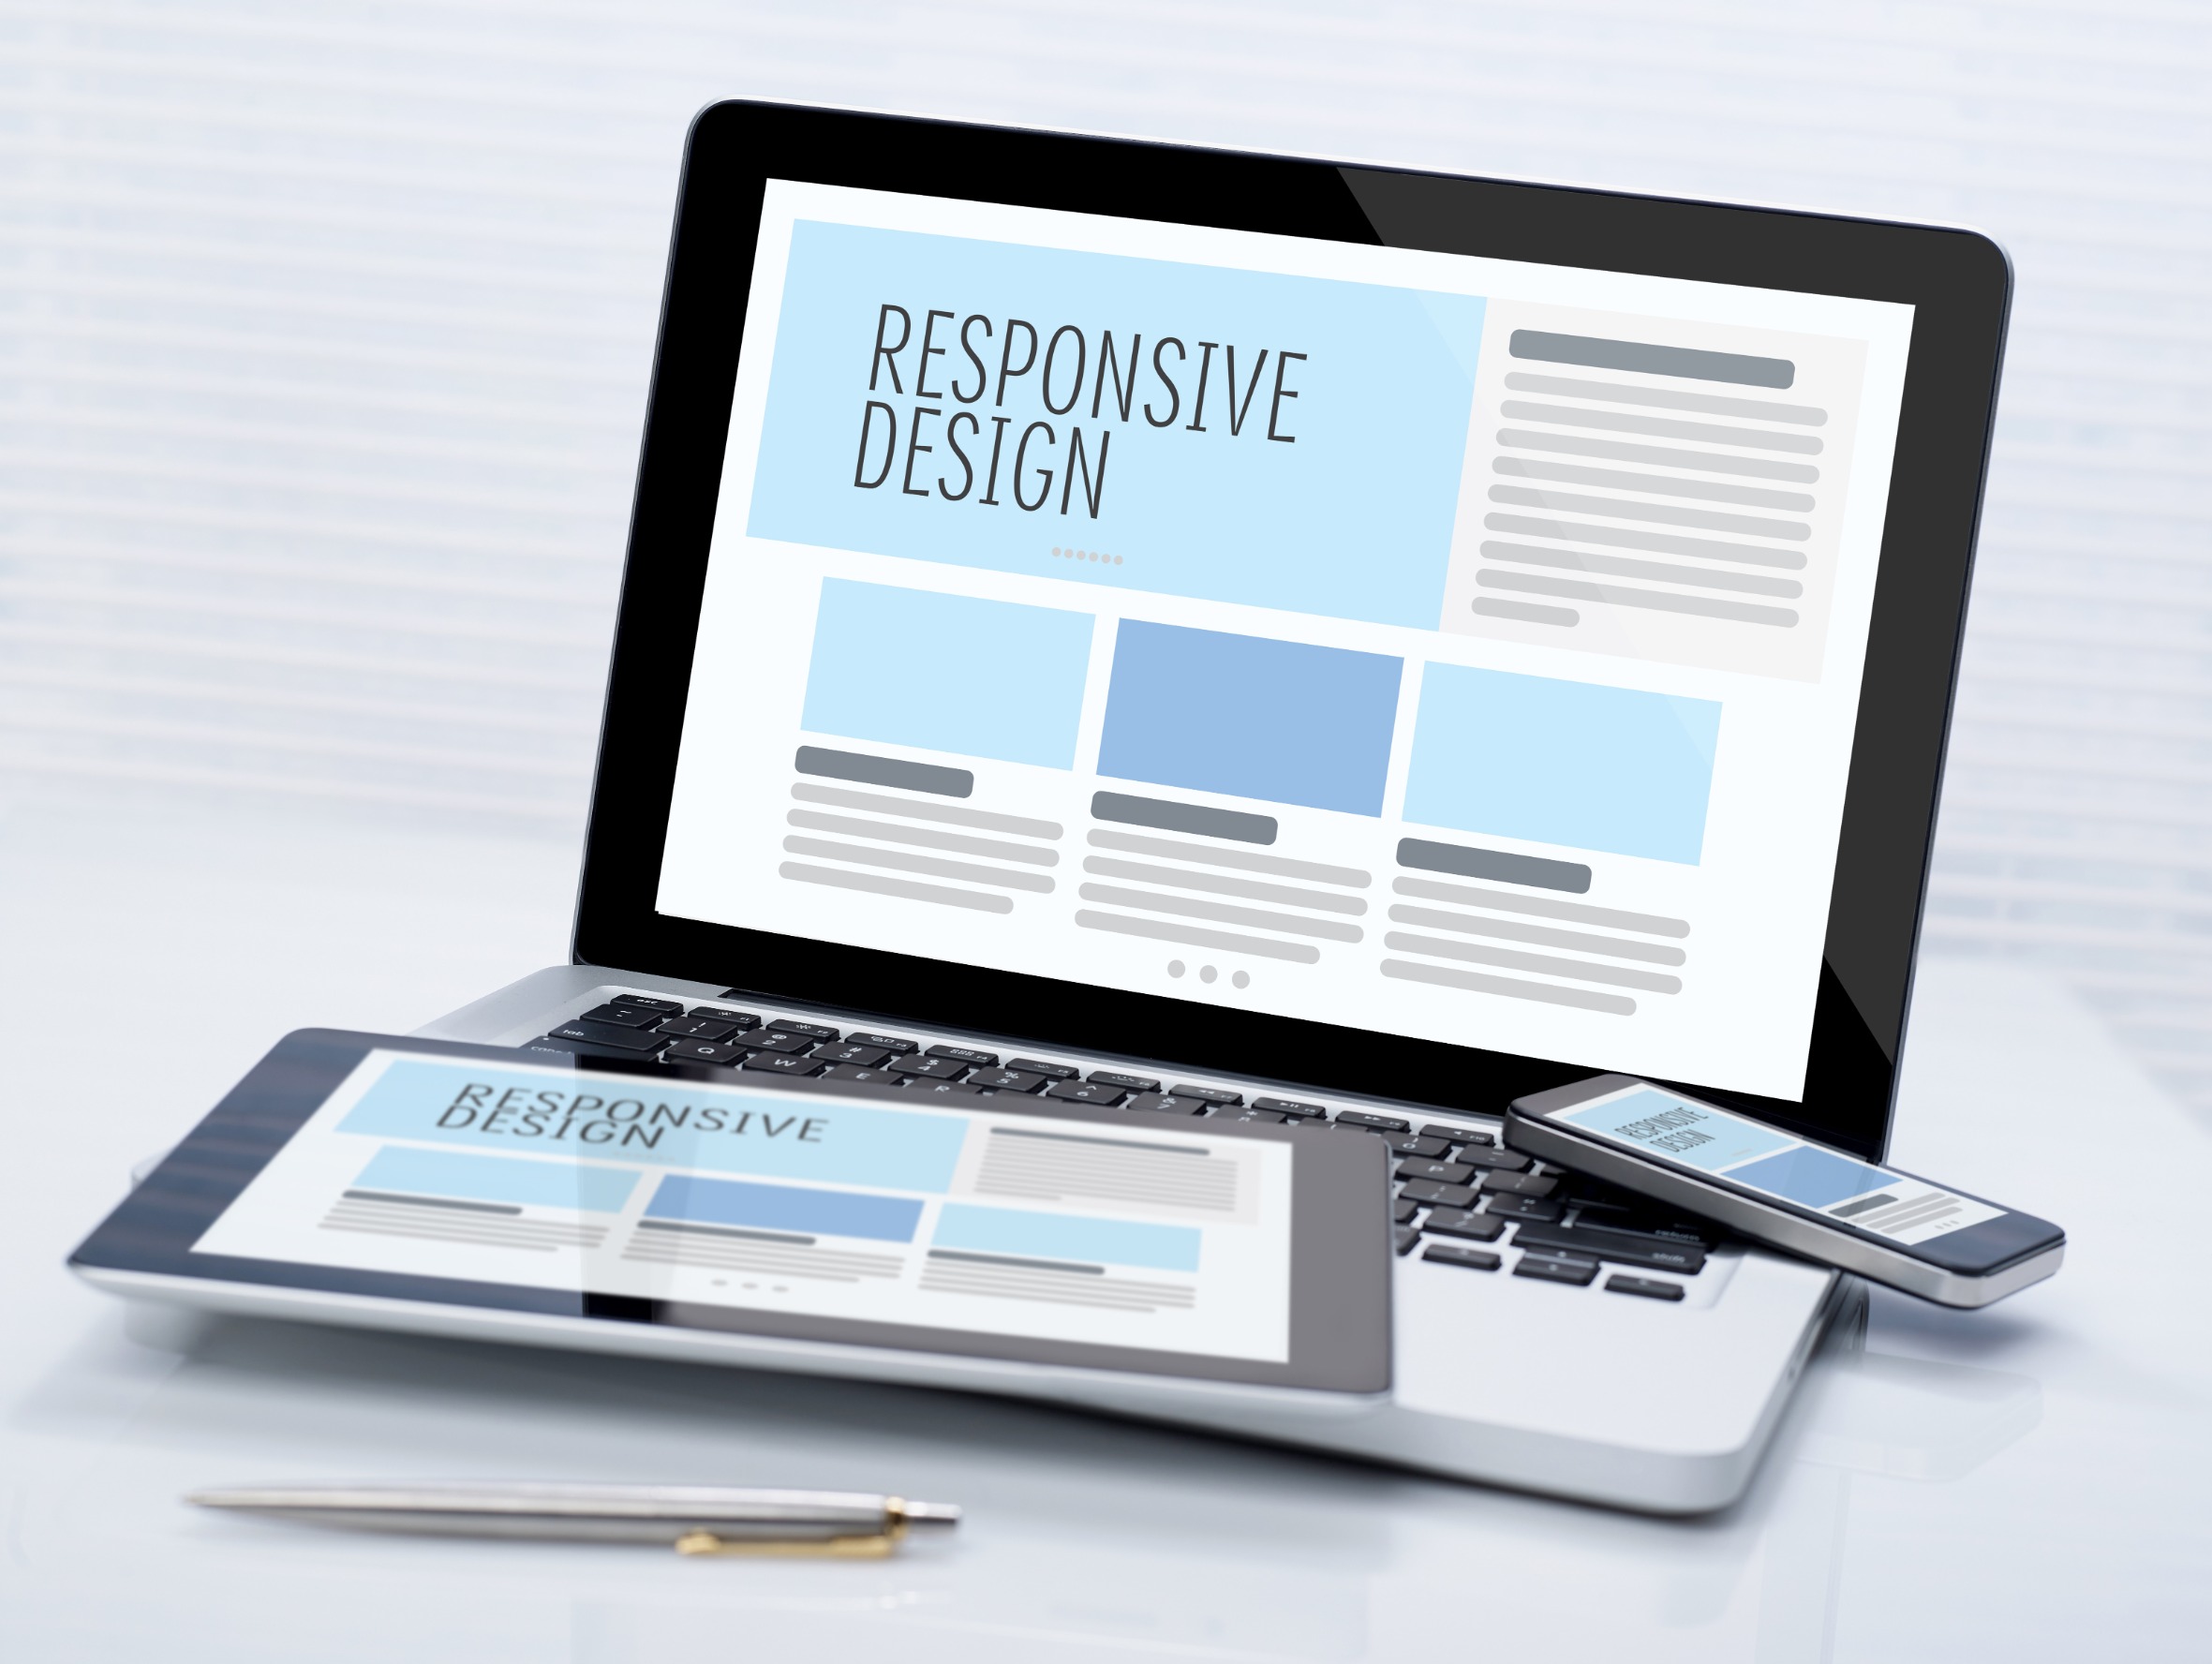 Responsive design image